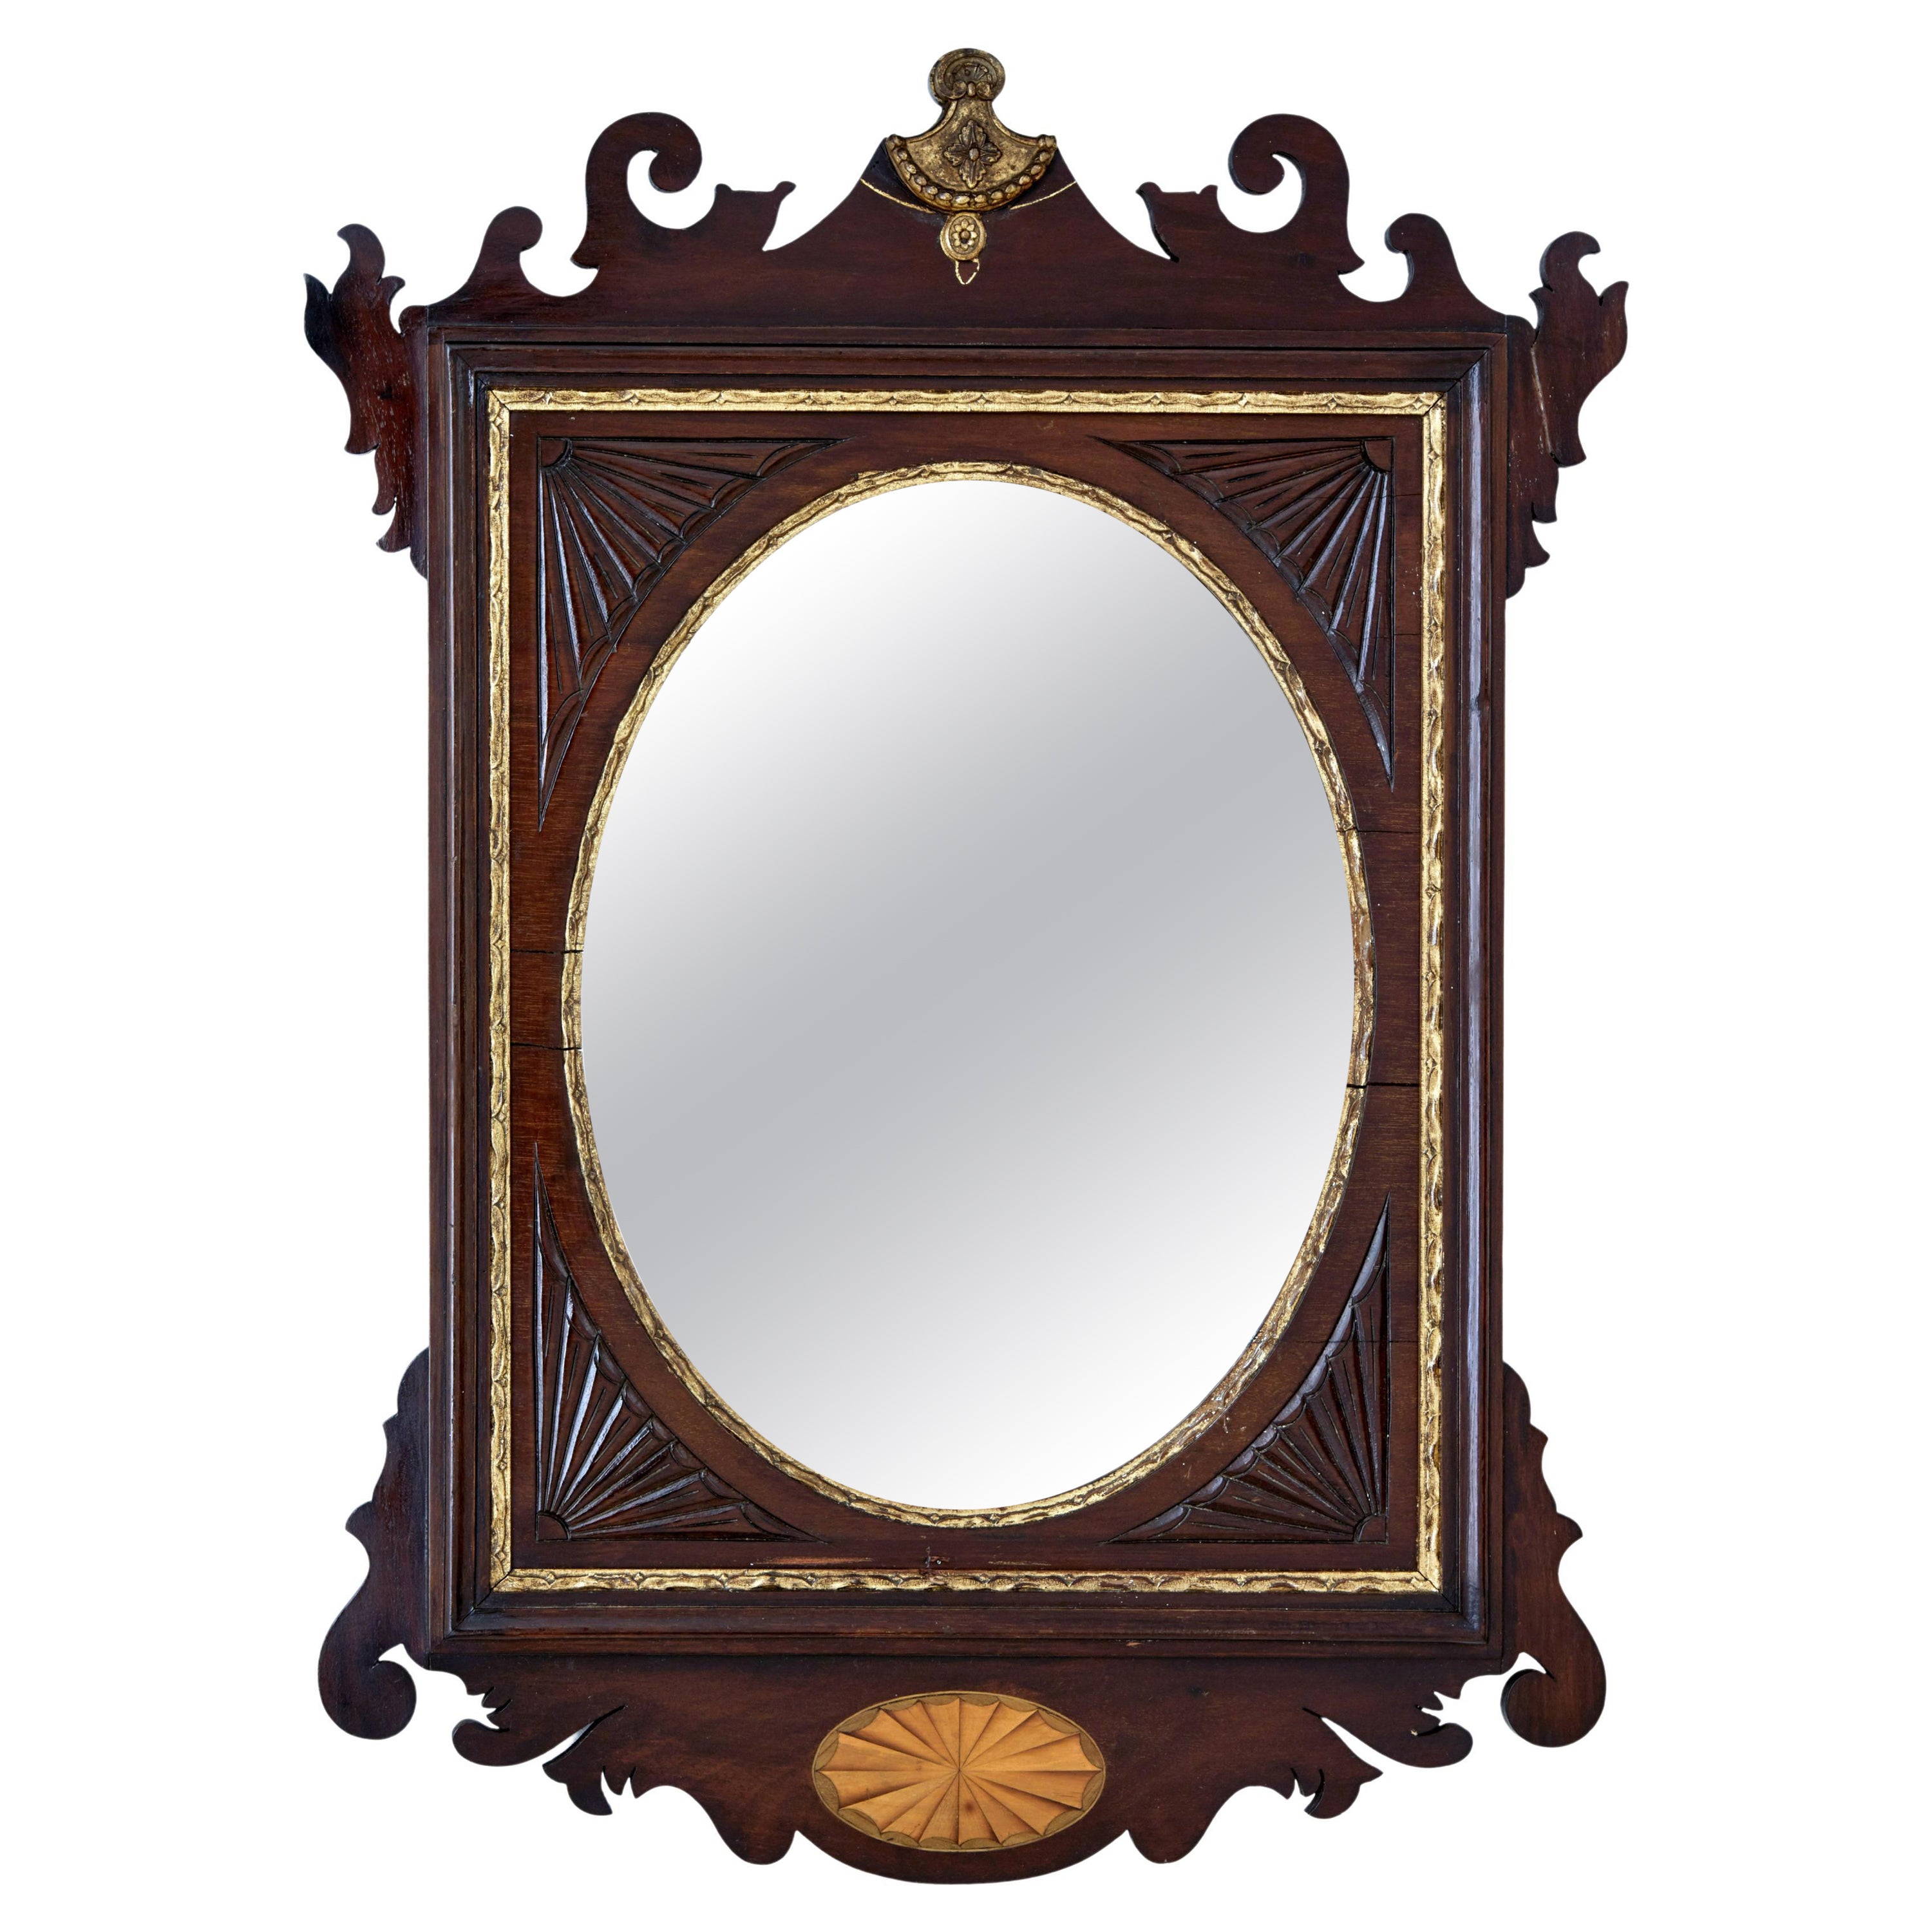 Late 19th century American Sheraton revival walnut mirror For Sale